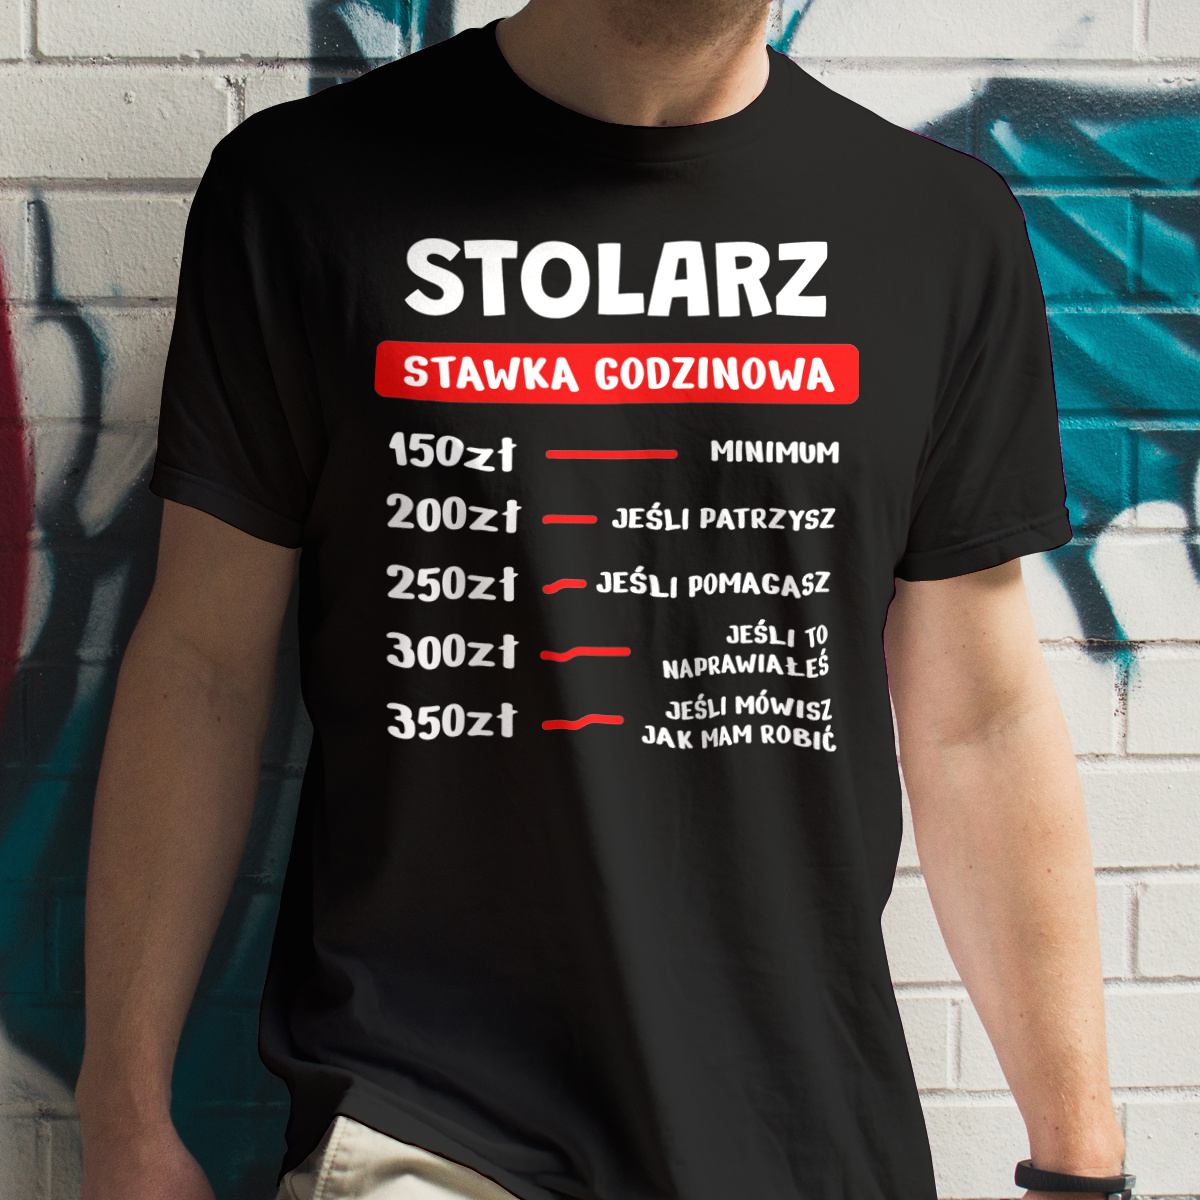 Stawka Godzinowa Stolarz - Męska Koszulka Czarna